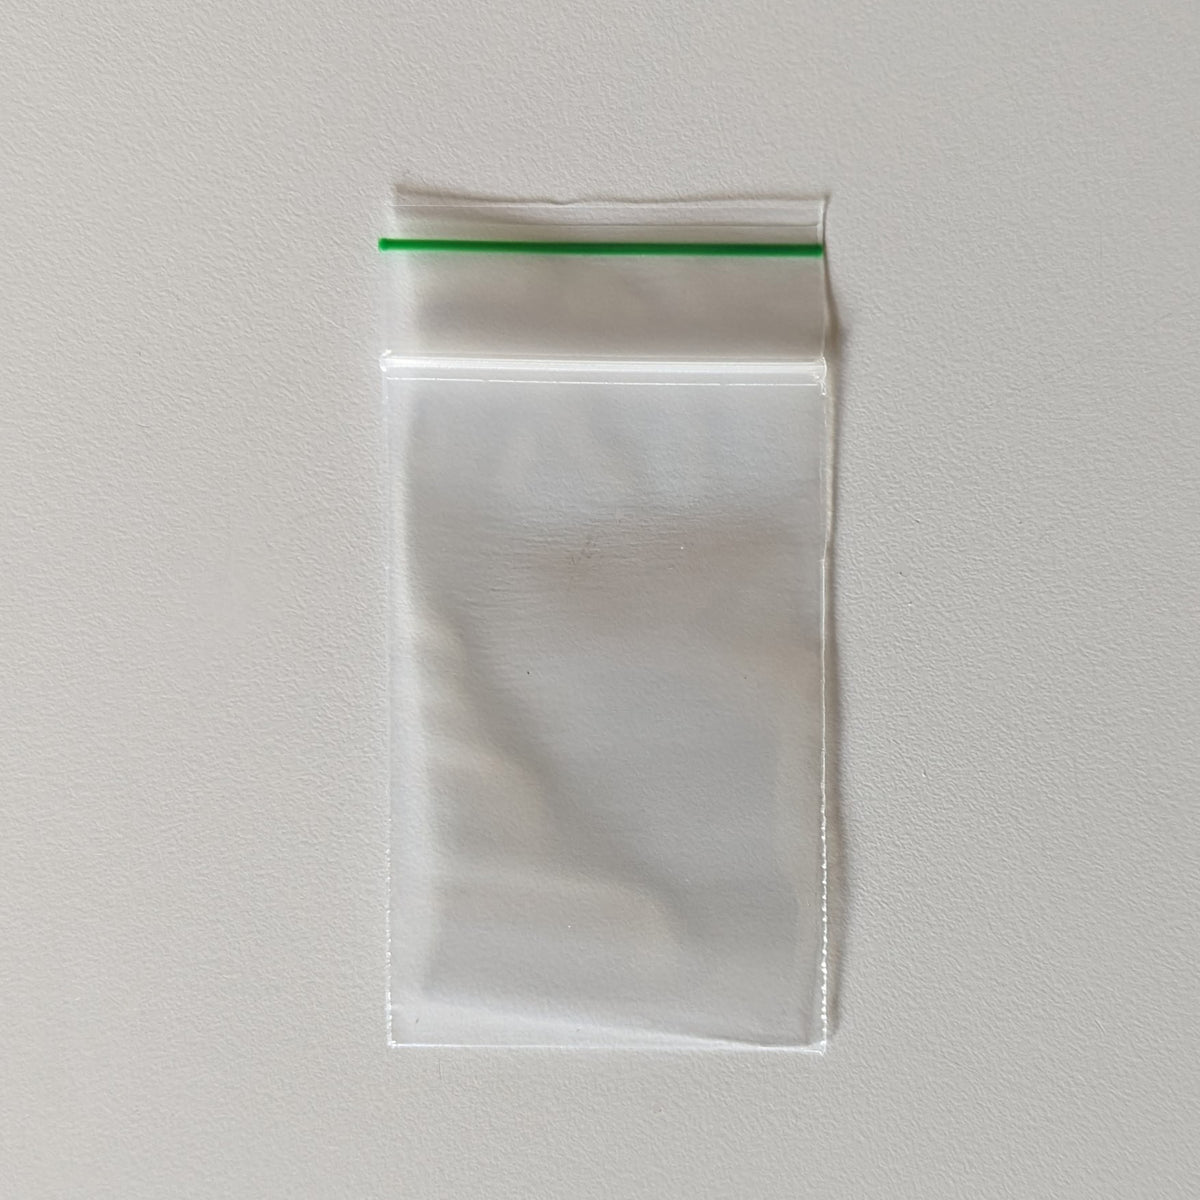 X-Small Clear Landfill-Biodegradable Plastic Ziplock Bags 1